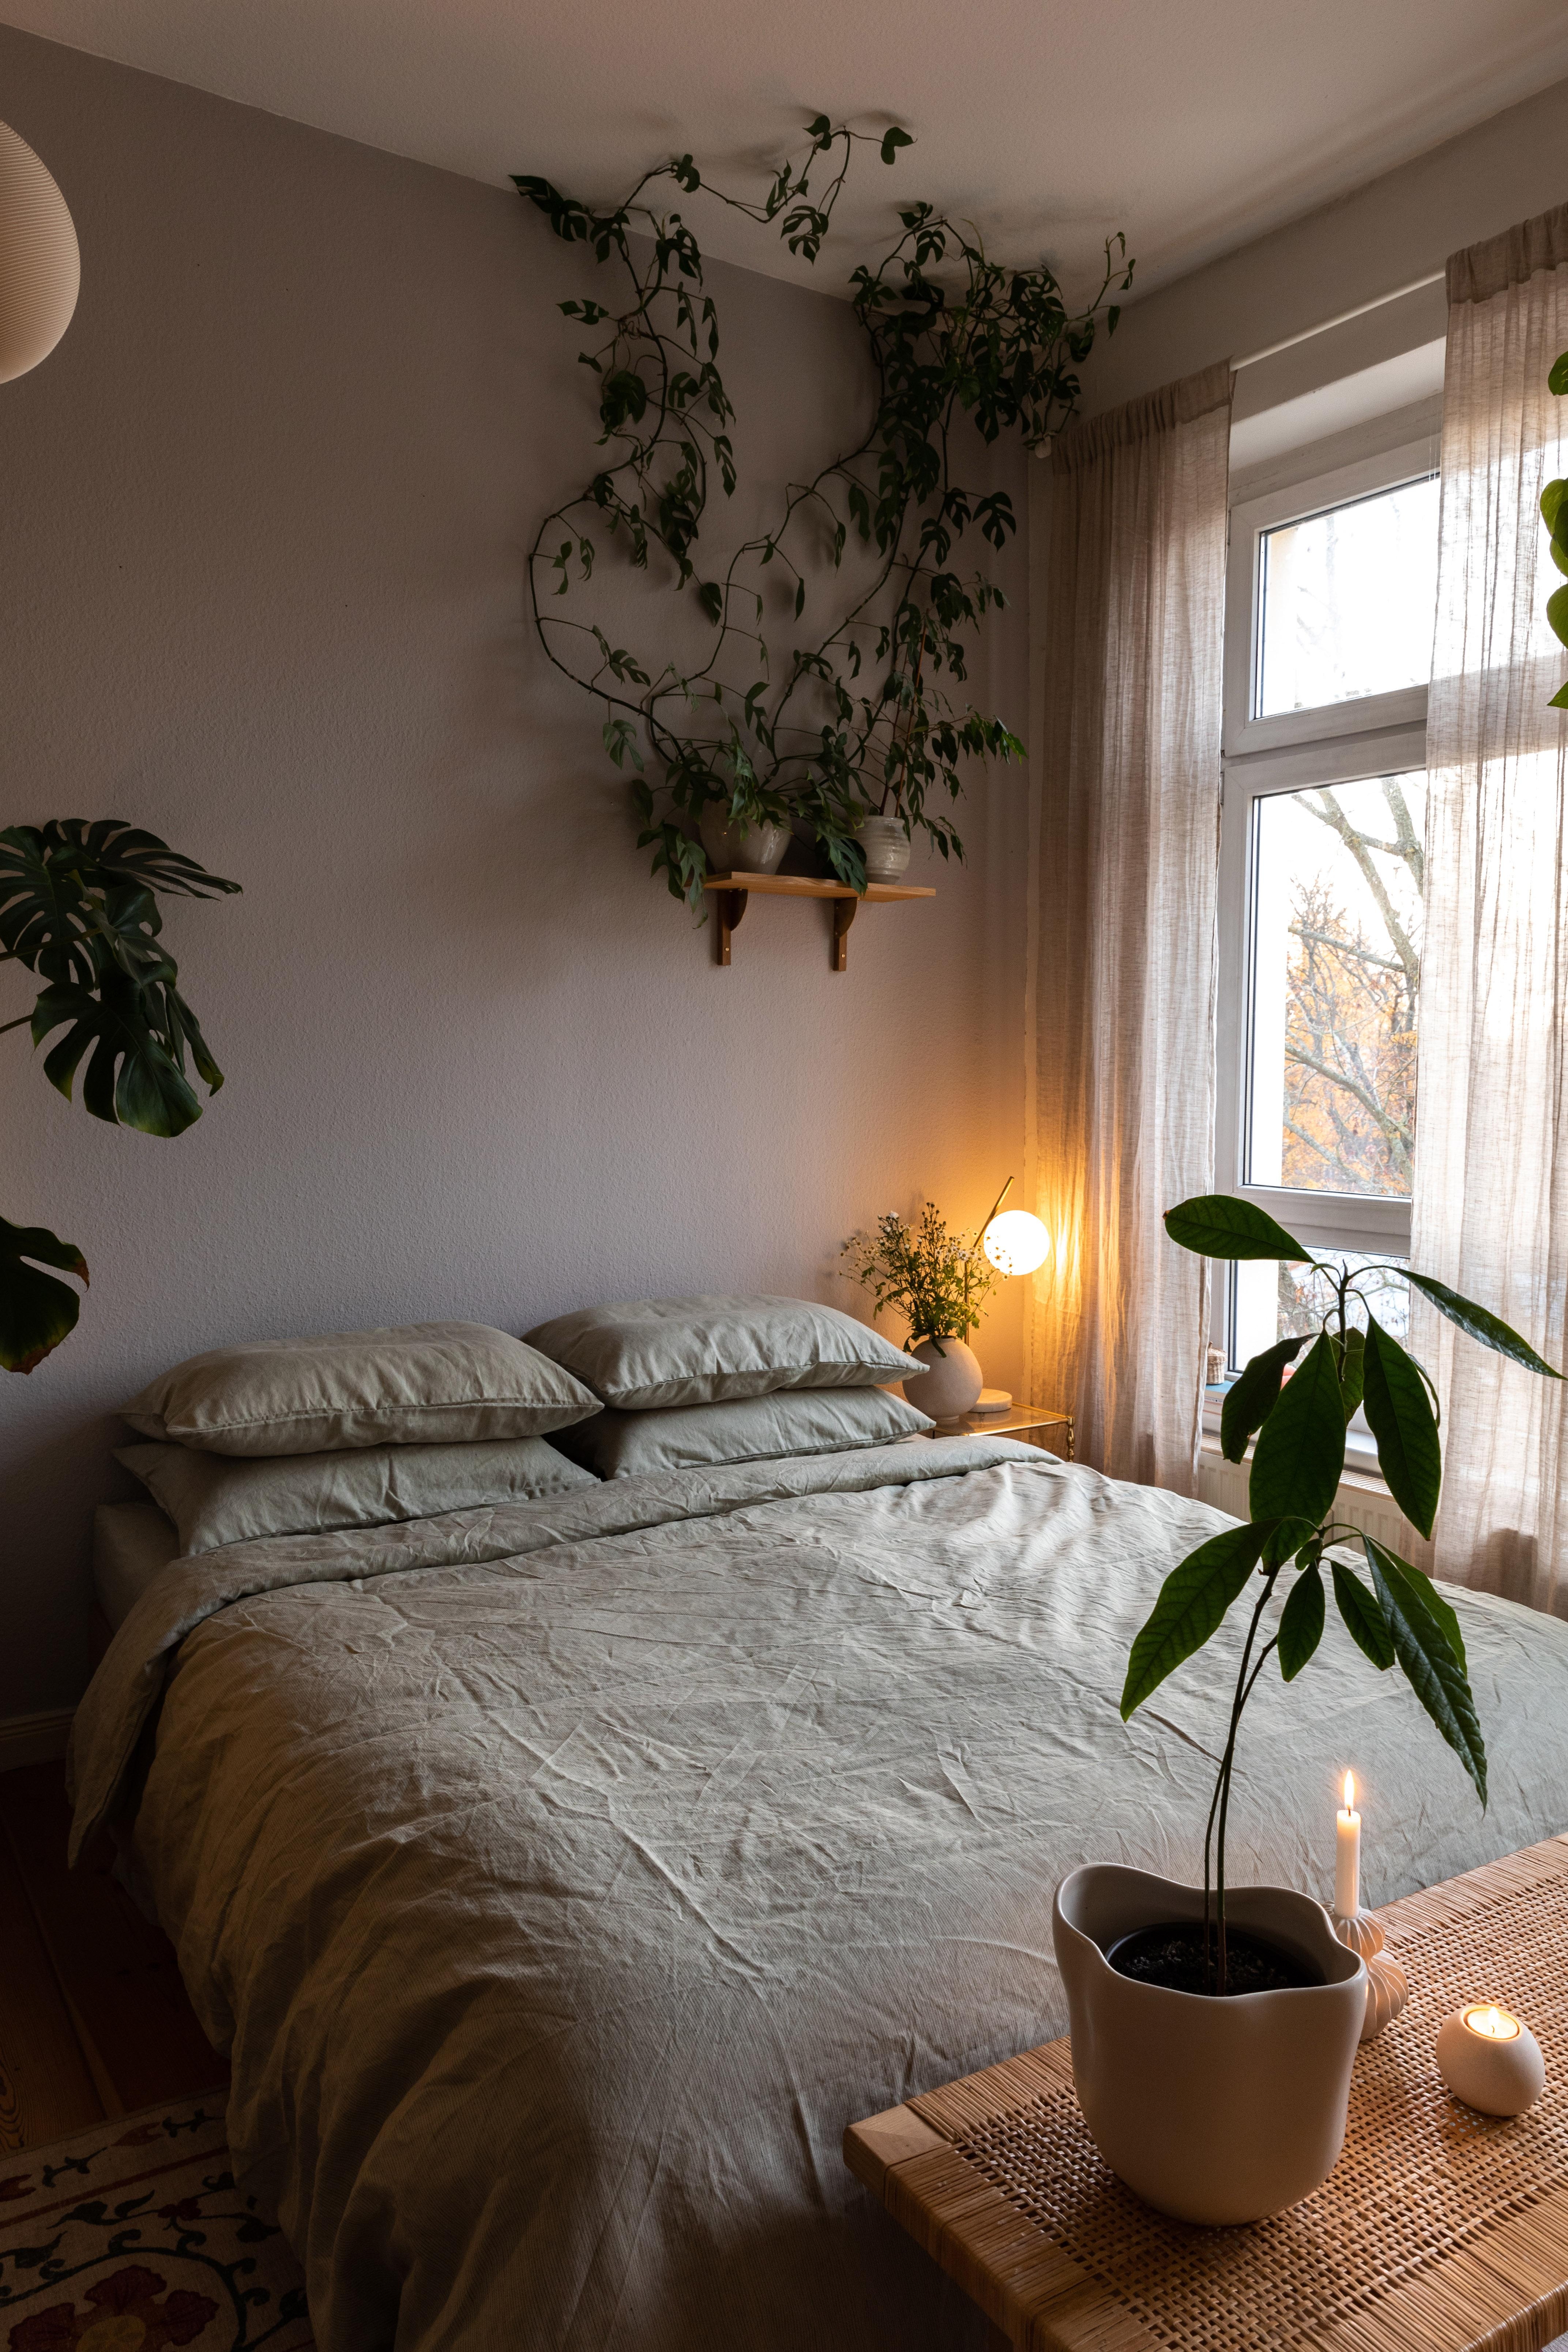 urban jungle bedroom #schlafzimmer #bedding #bedroom #bedroomdecor #home #cozyhome #urbanjungle